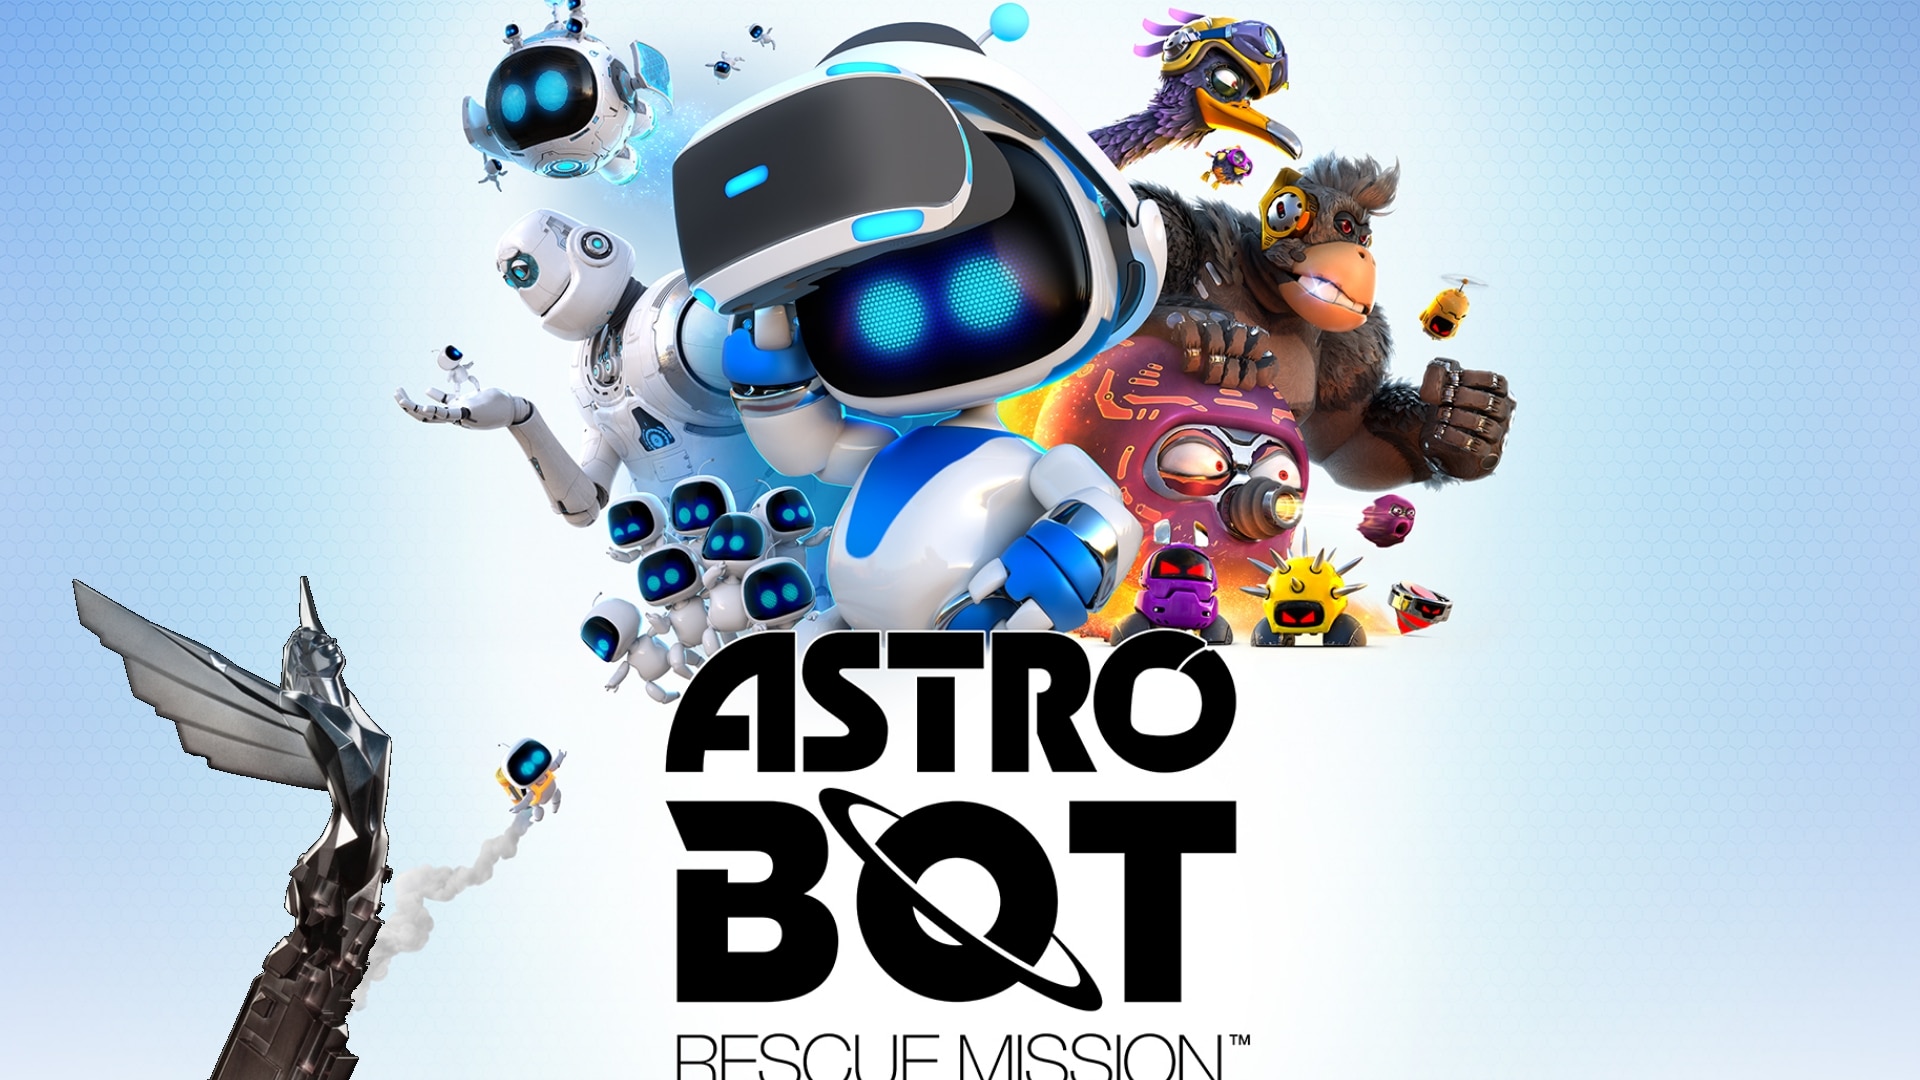 astro bot game awards 2018